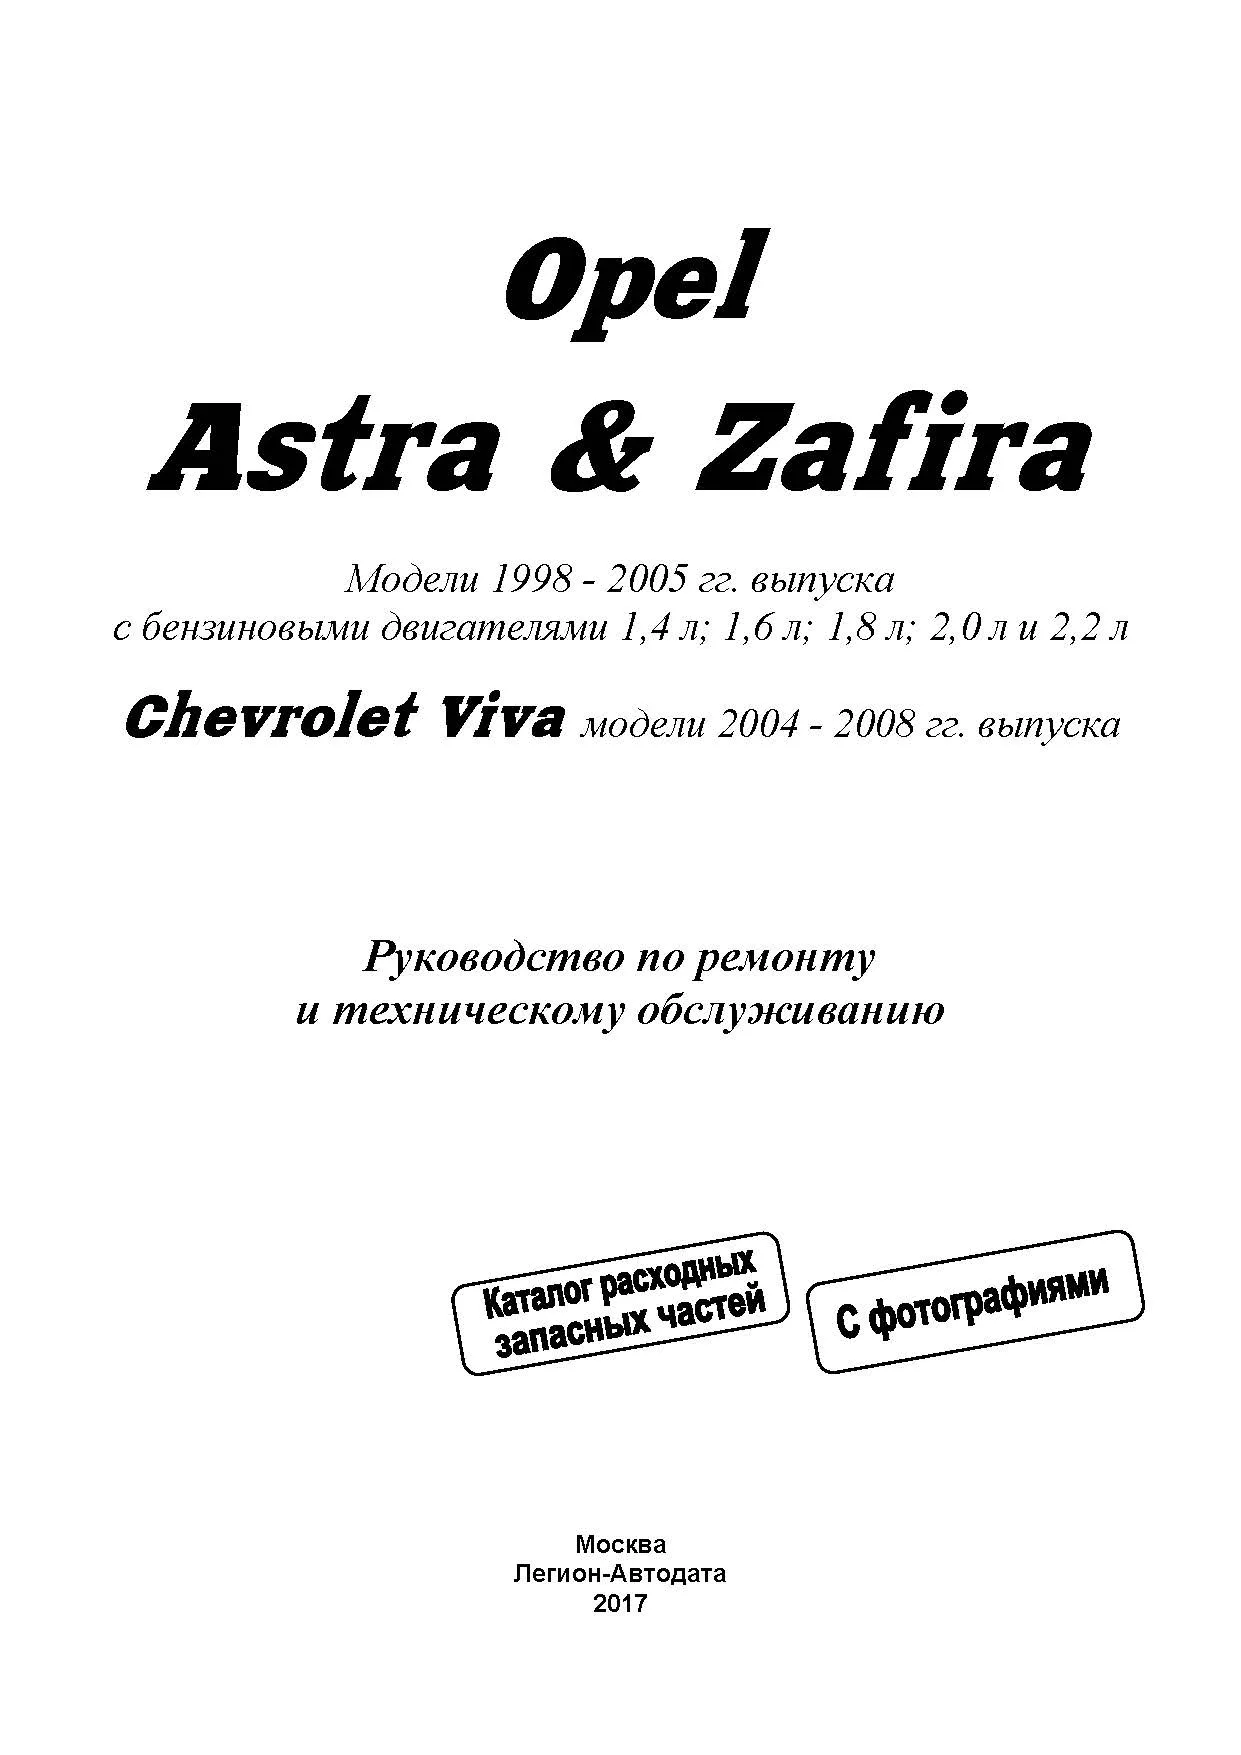 Книга Opel Astra, Zafira 1998-2005, Chevrolet Viva 2004-2008 бензин, электросхемы, каталог з/ч, ч/б фото. Руководство по ремонту и эксплуатации автомобиля. Легион-Aвтодата